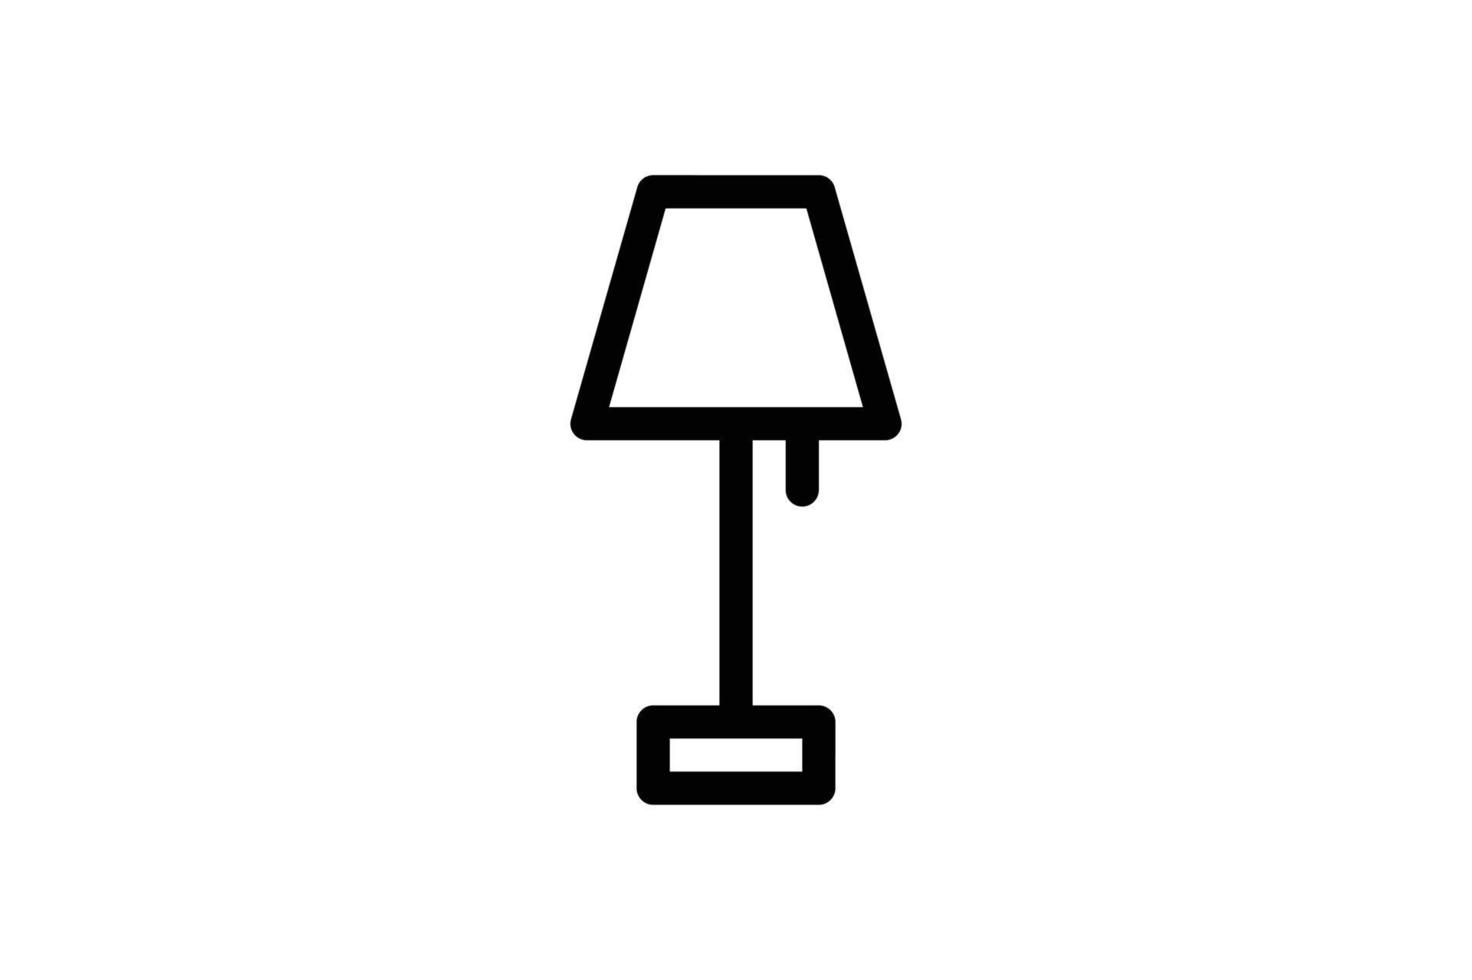 Asser Almeja famélico icono de lámpara de pie estilo de línea doméstica gratis 6606941 Vector en  Vecteezy